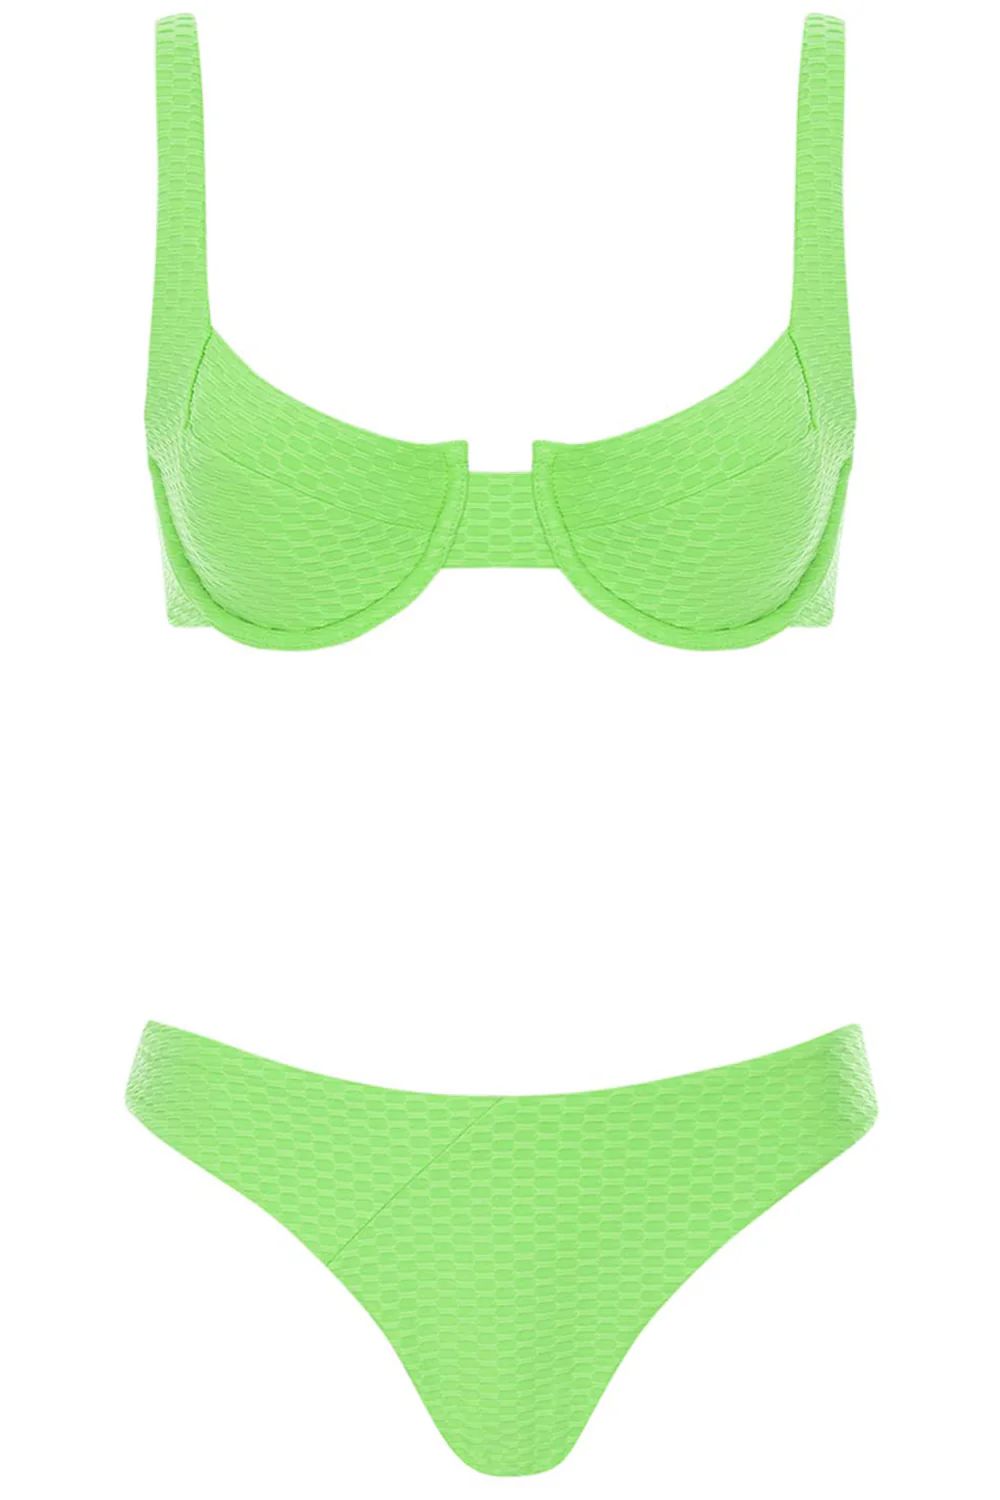 Laguna Bikini Green Set | VETCHY